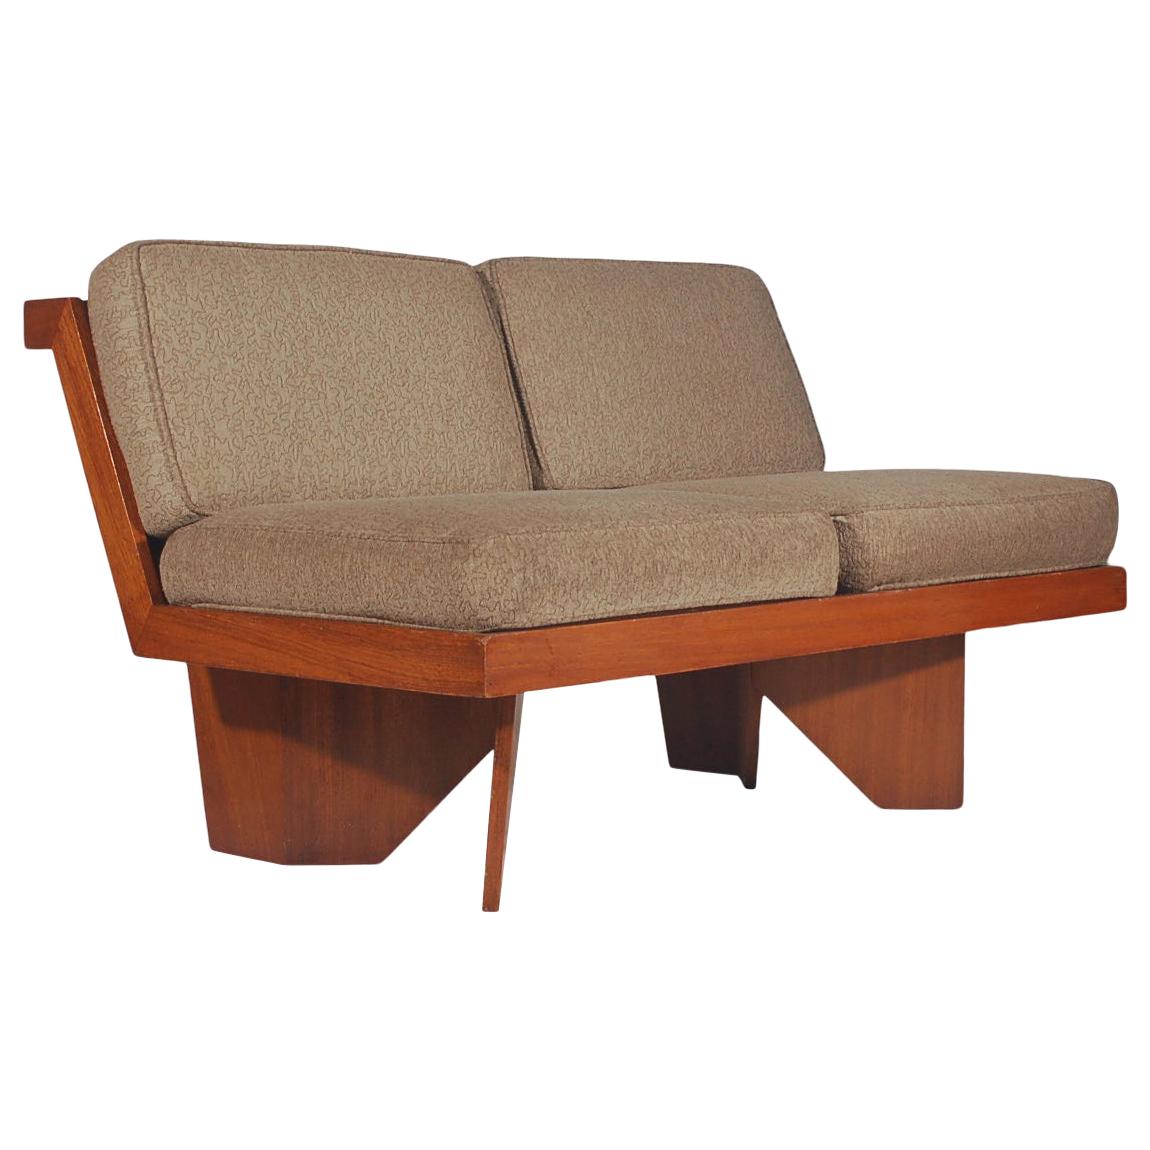 Midcentury Craftsman Modern Plywood Loveseat or Sofa after Frank Lloyd Wright